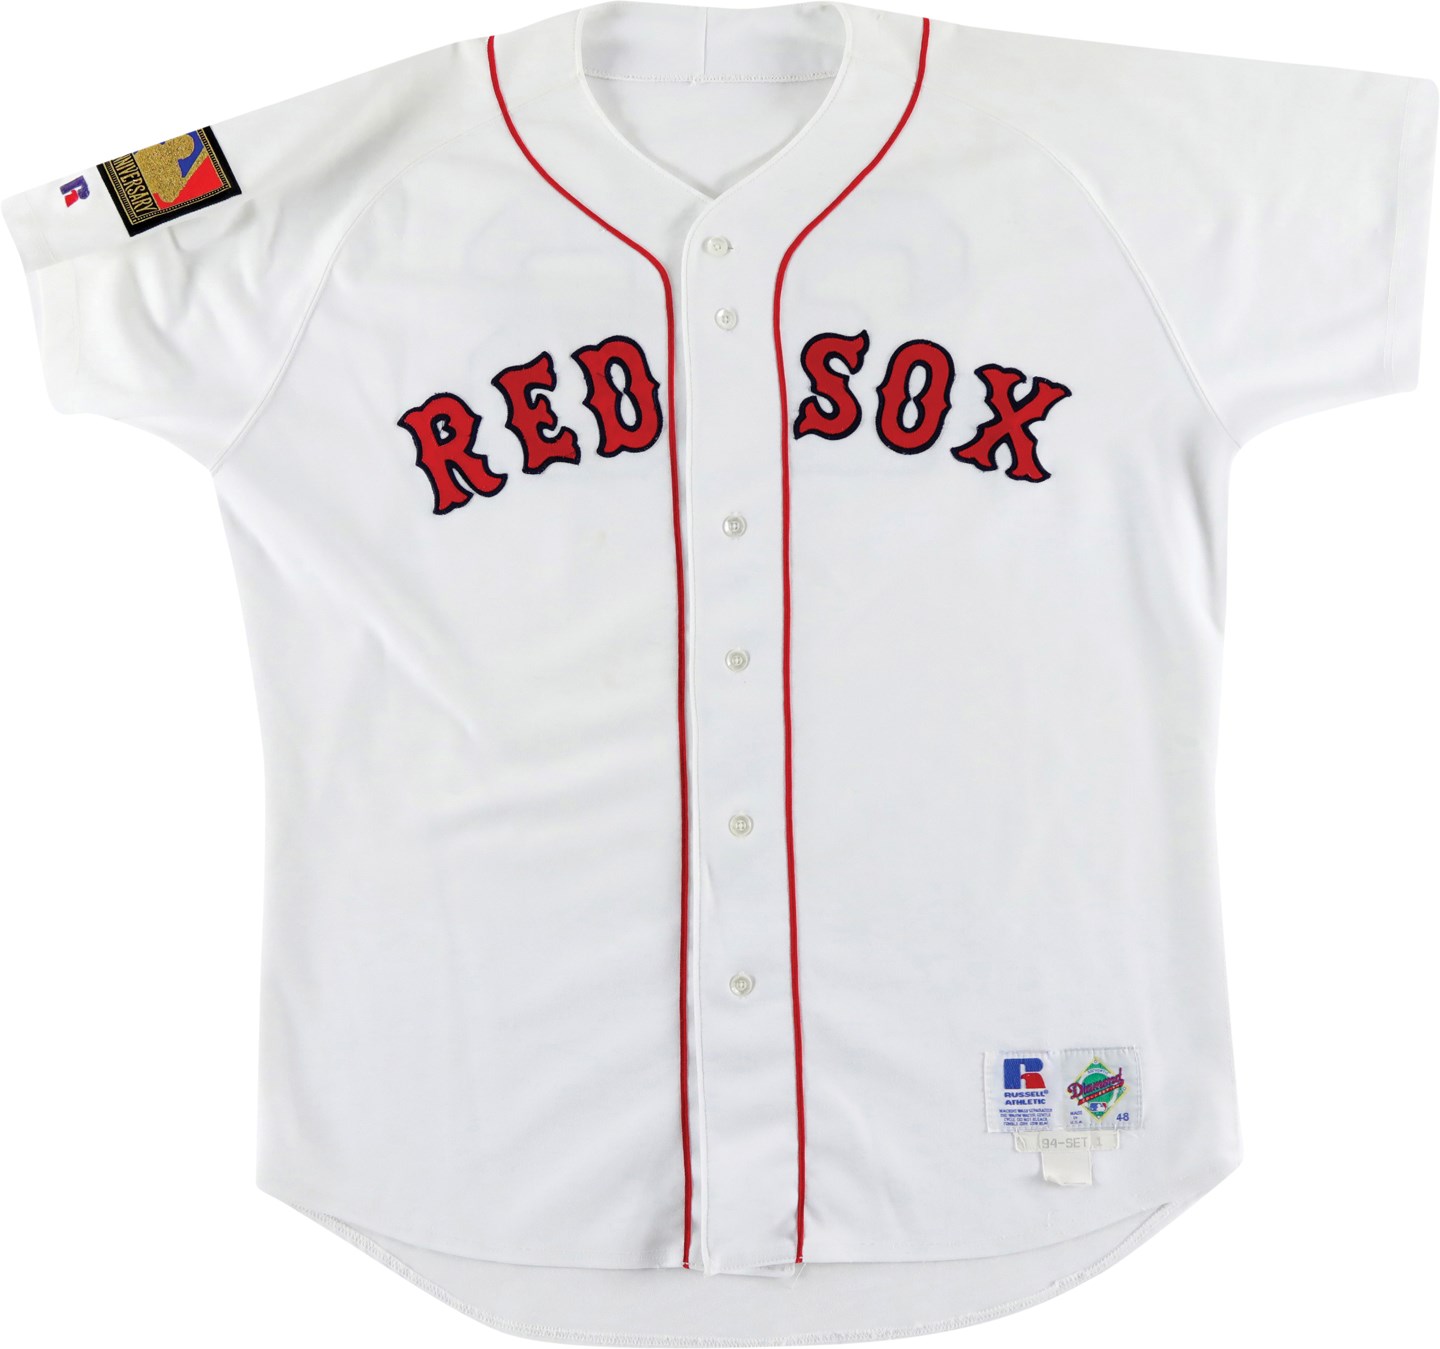 Baseball Equipment - 1994 Scott Cooper Boston Red Sox Game Worn Jersey